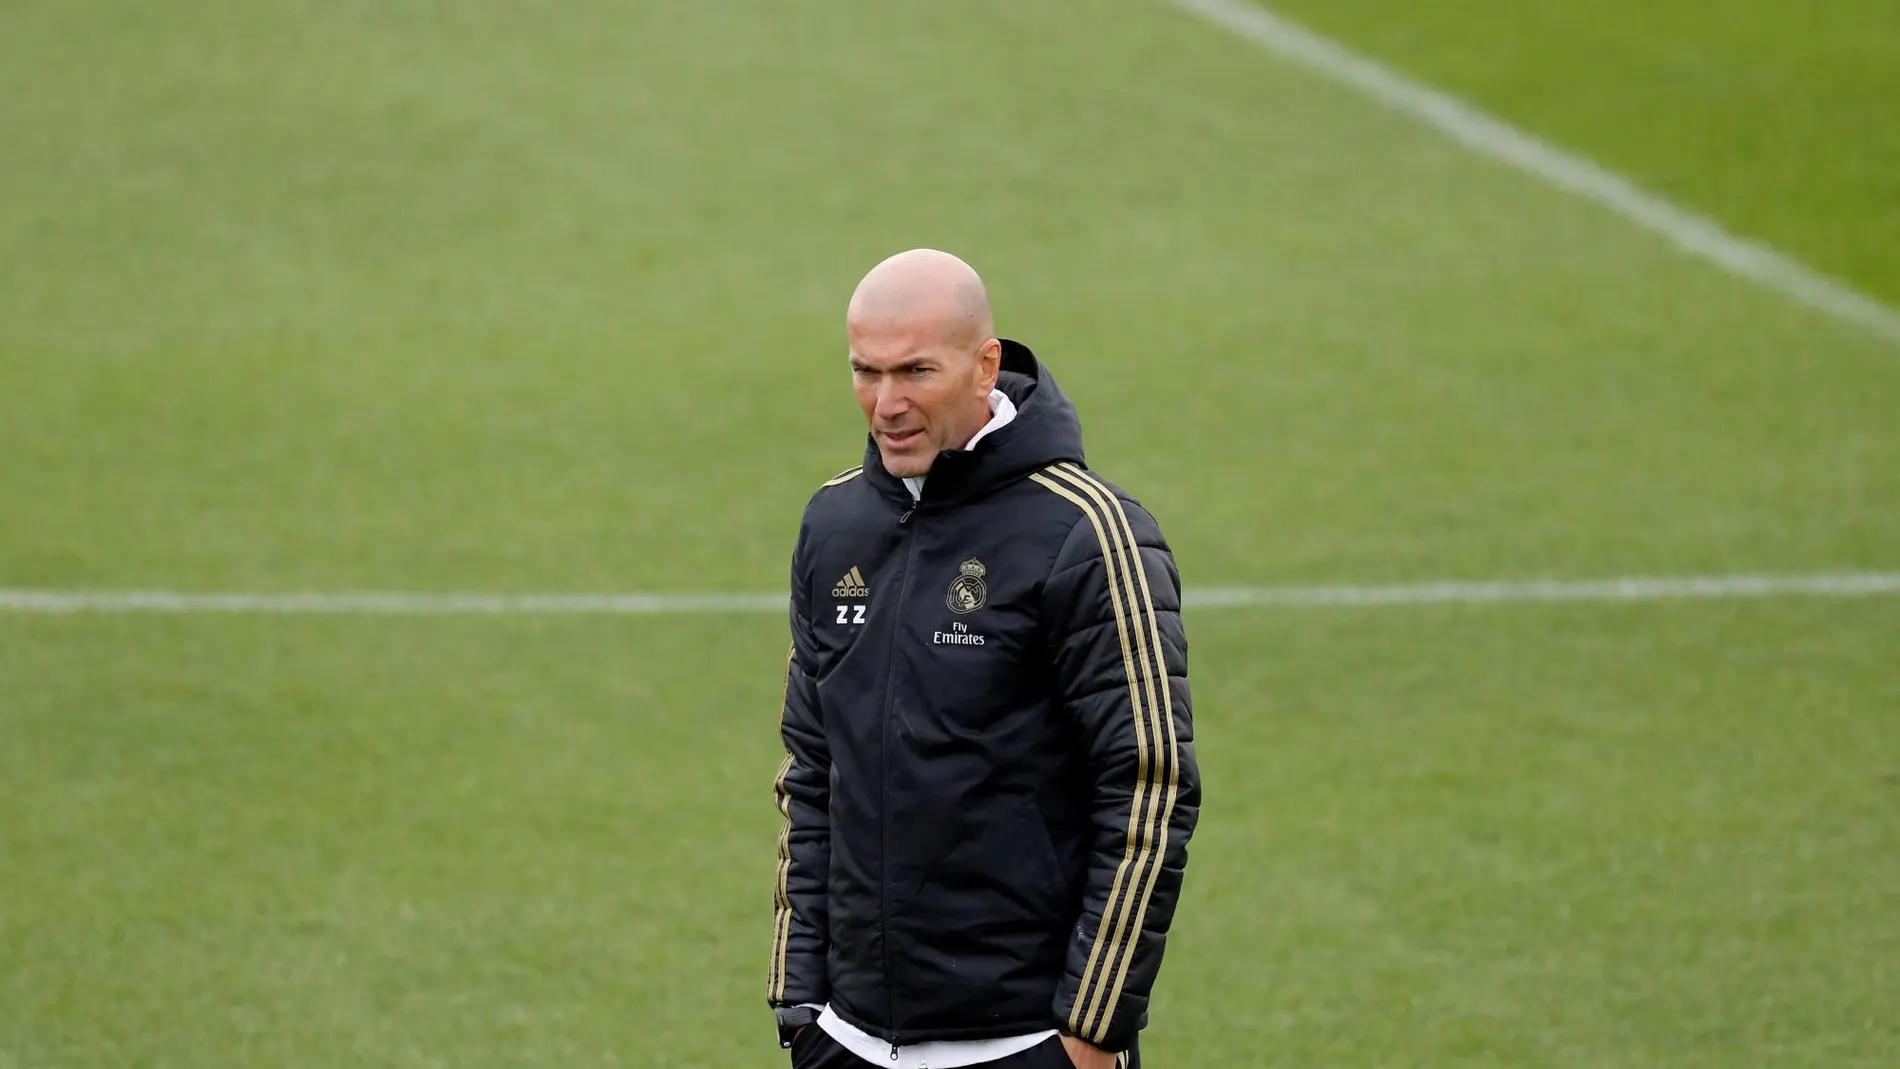 Zidane, en Valdebebas